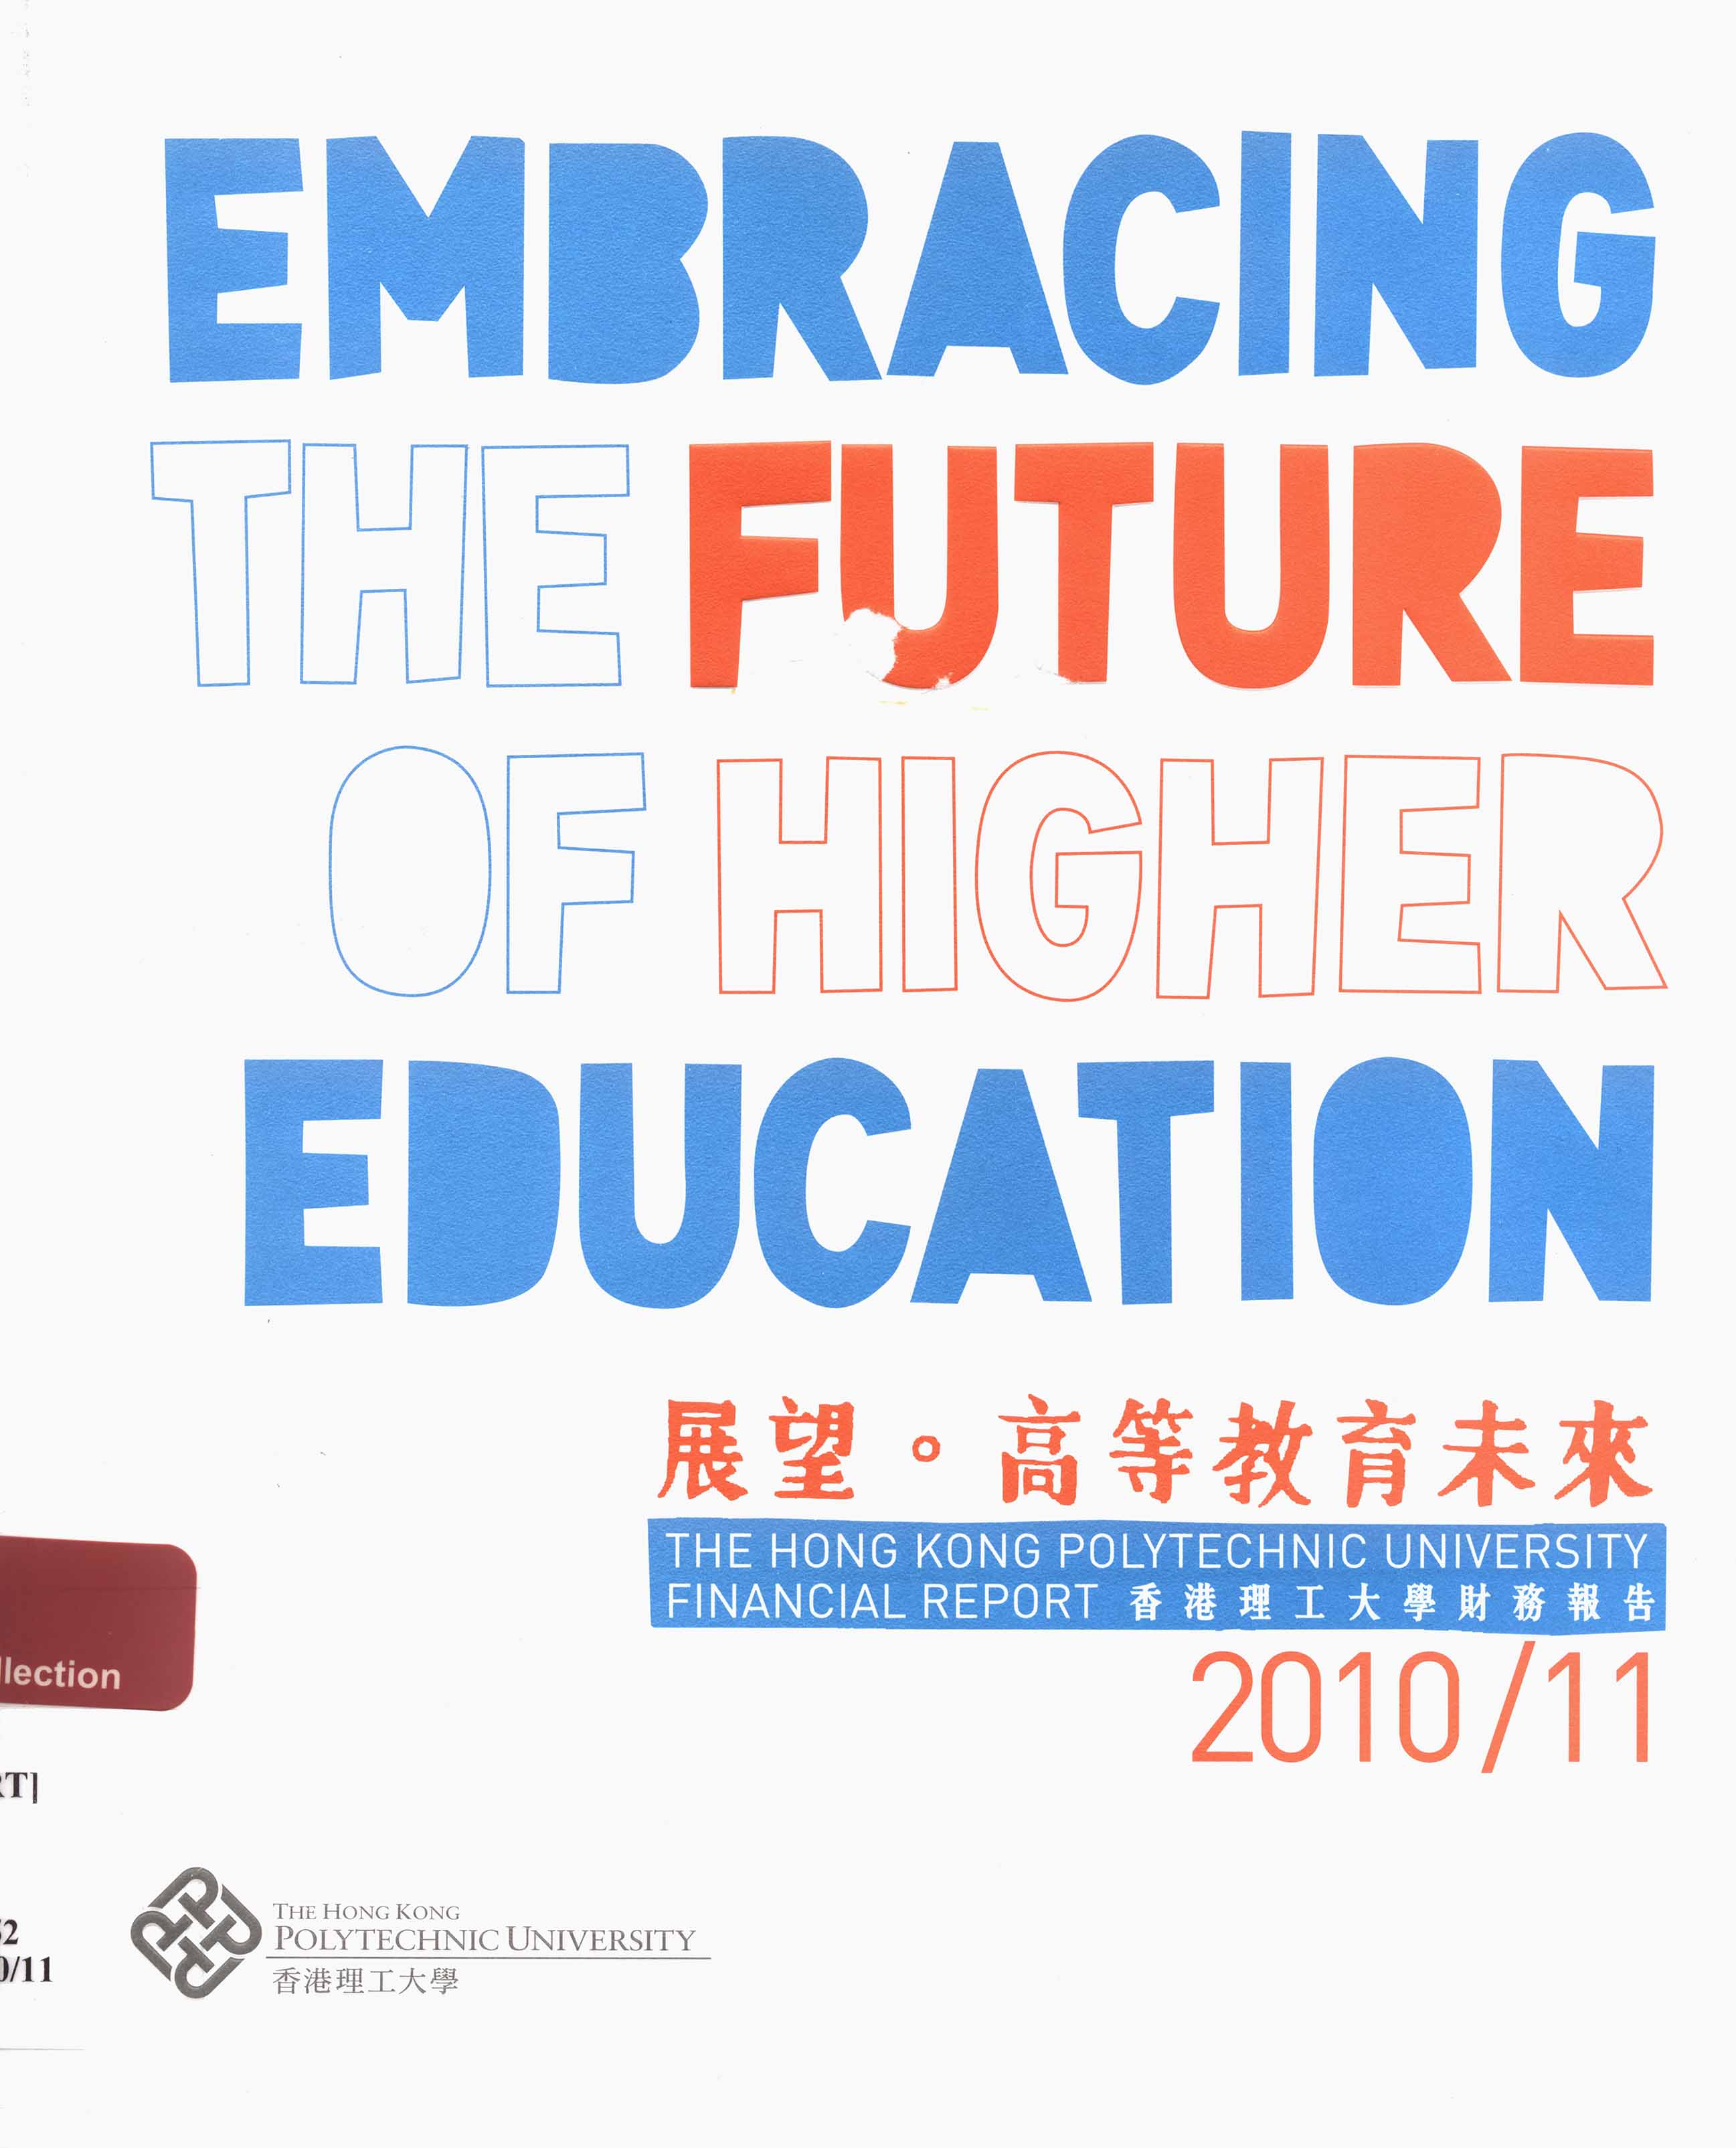 Hong Kong Polytechnic University Financial report 2010/11